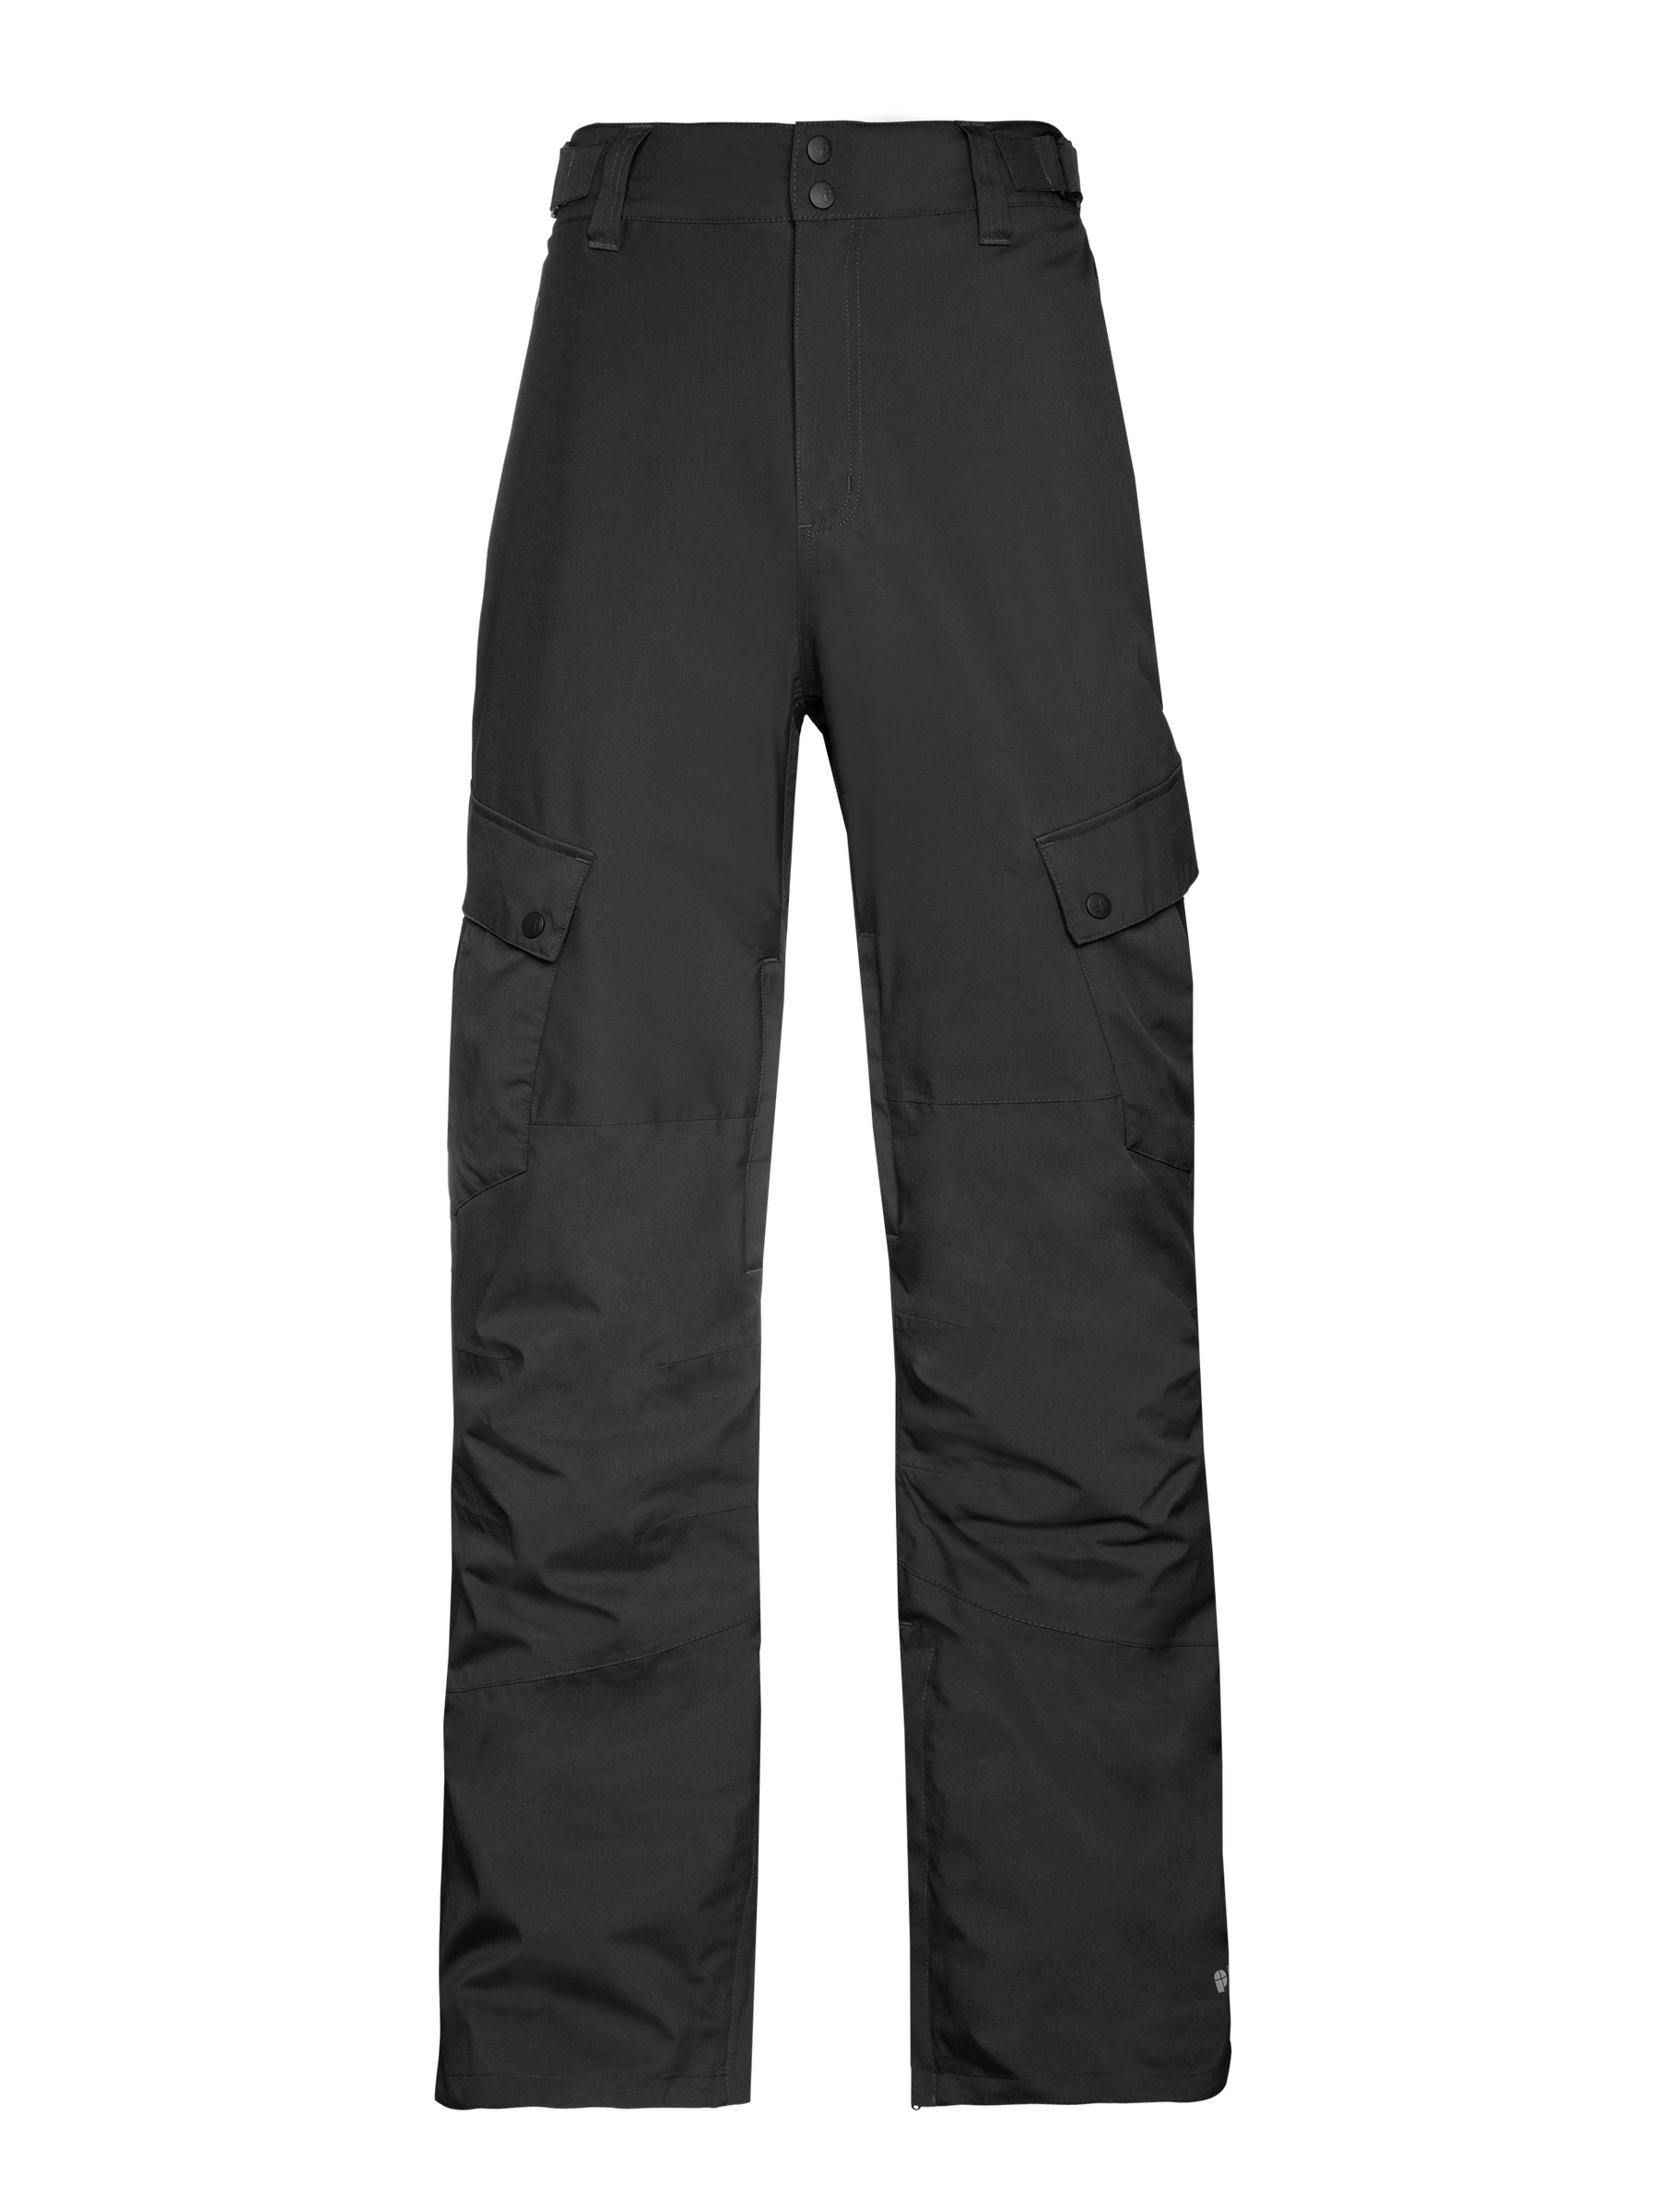 COPOZZ Thicken Winter Ski Pants Men Warm Snow Trousers Snowboarding  Windproof Waterproof Outdoor 231221 From Jin007, $107.15 | DHgate.Com